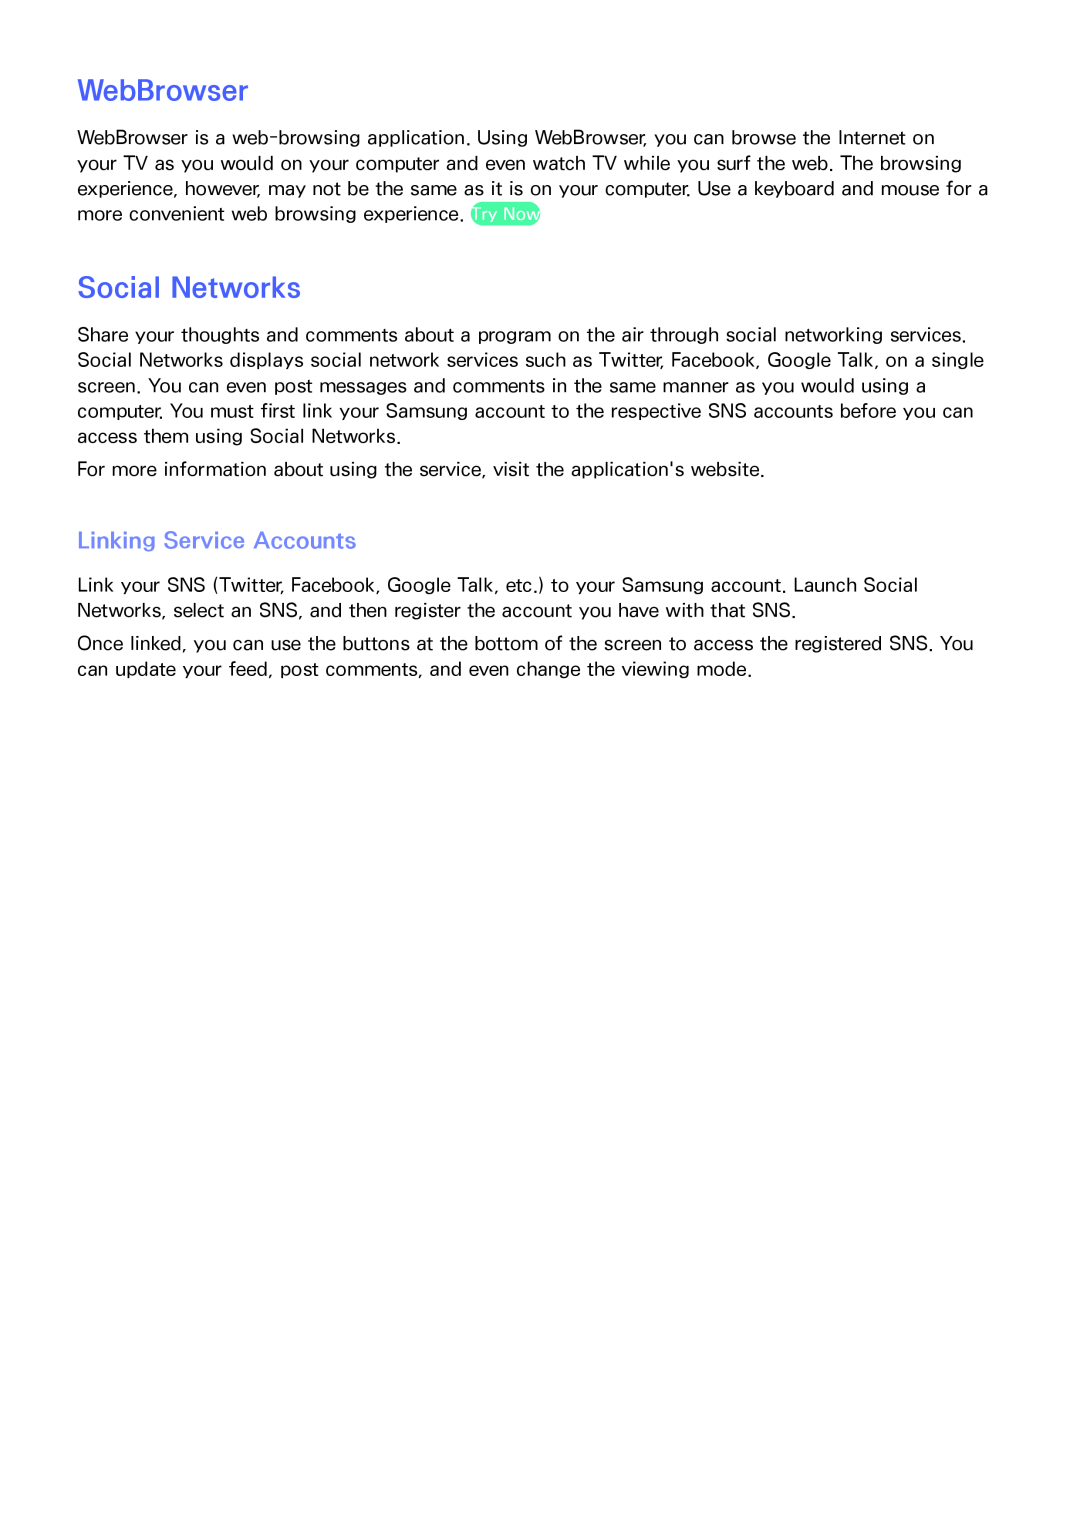 Samsung SEK-1000 manual WebBrowser, Social Networks, Linking Service Accounts 